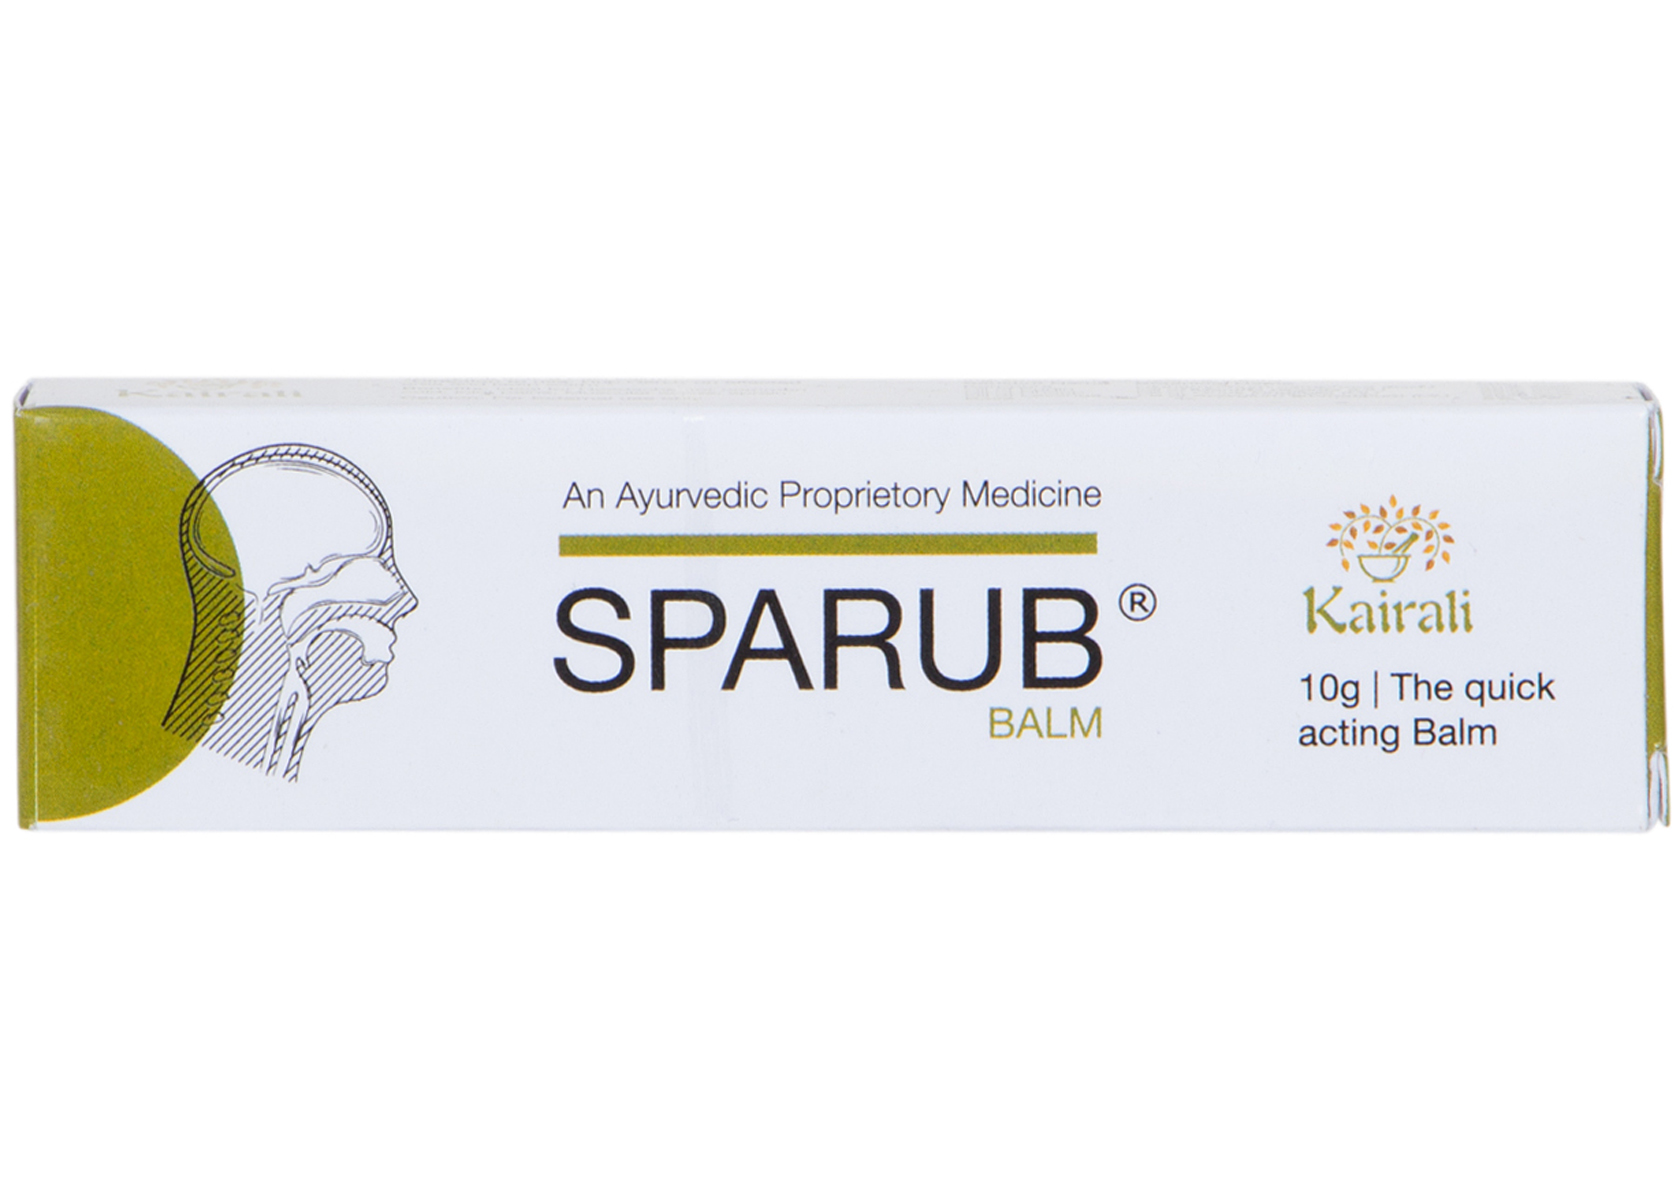 Buy Kairali Spa Rub at Best Price Online